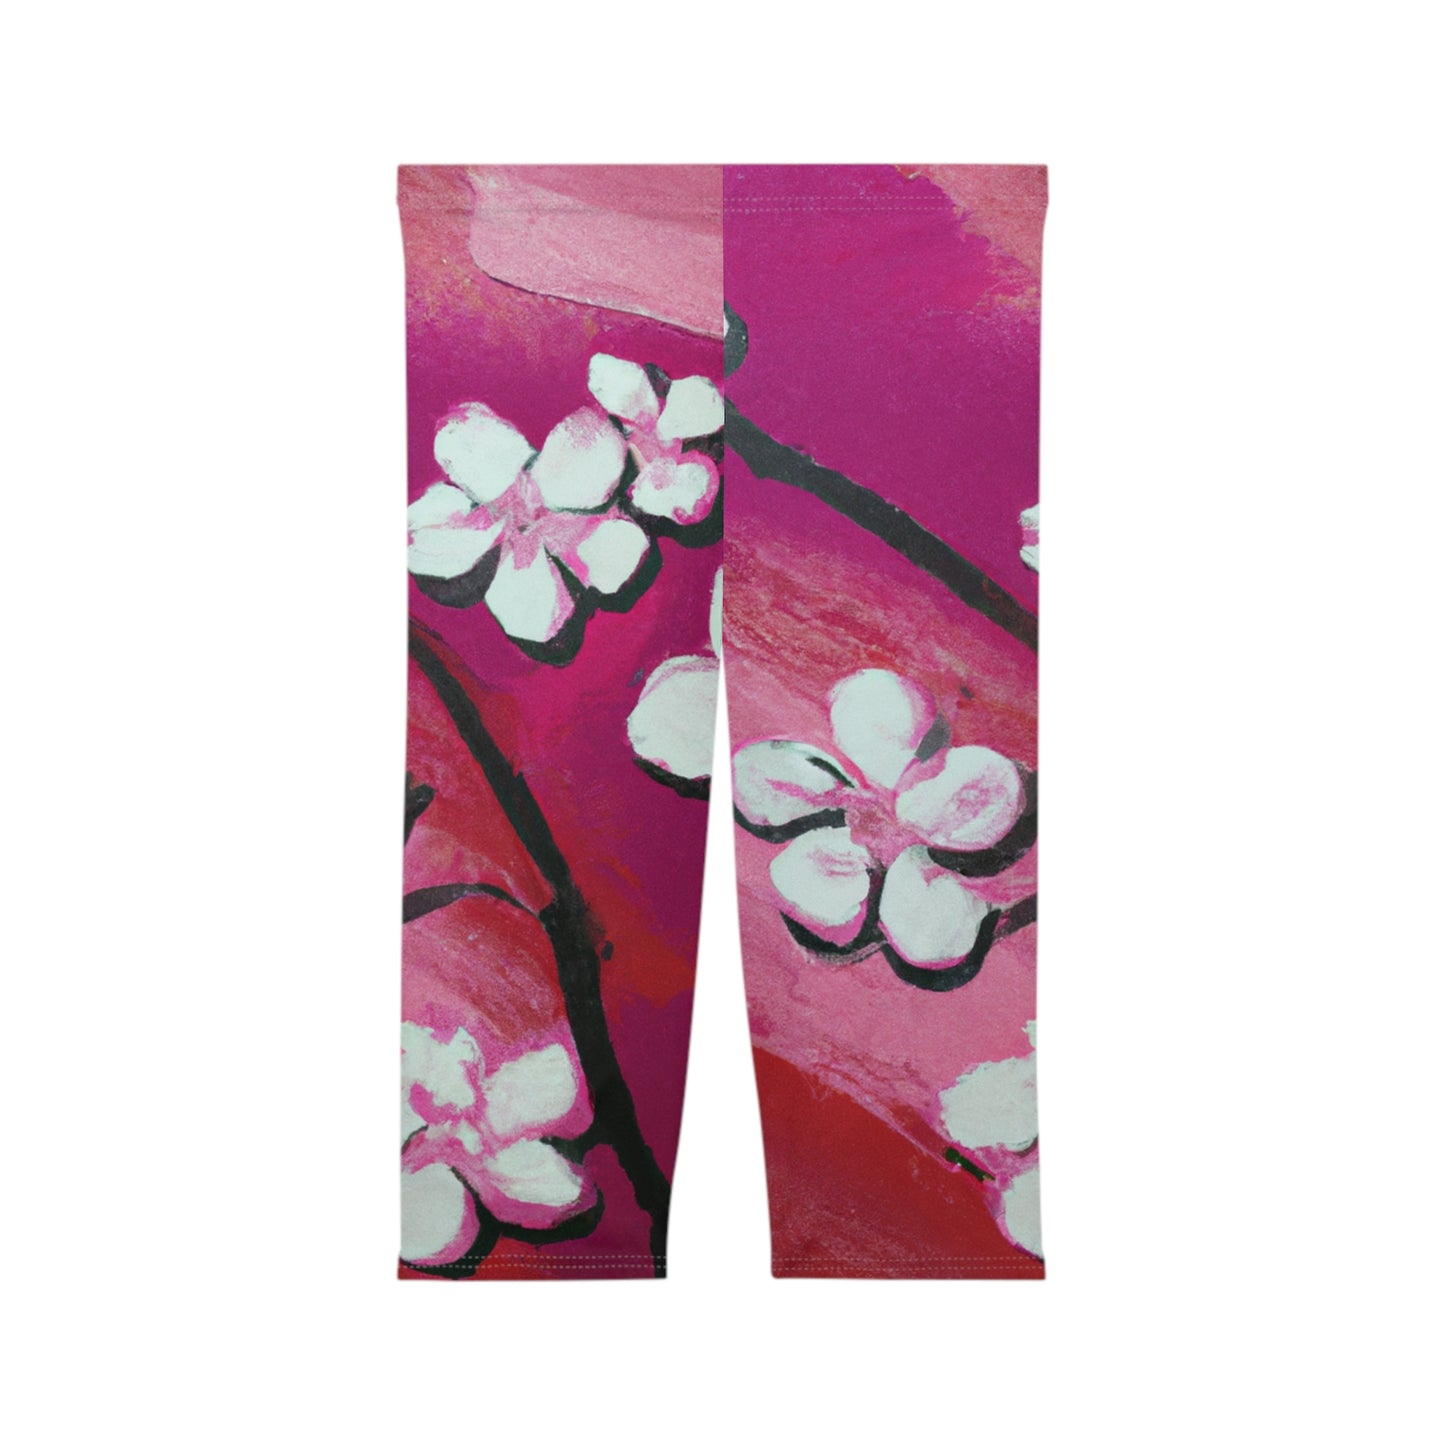 Ephemeral Blossom - Capri Shorts